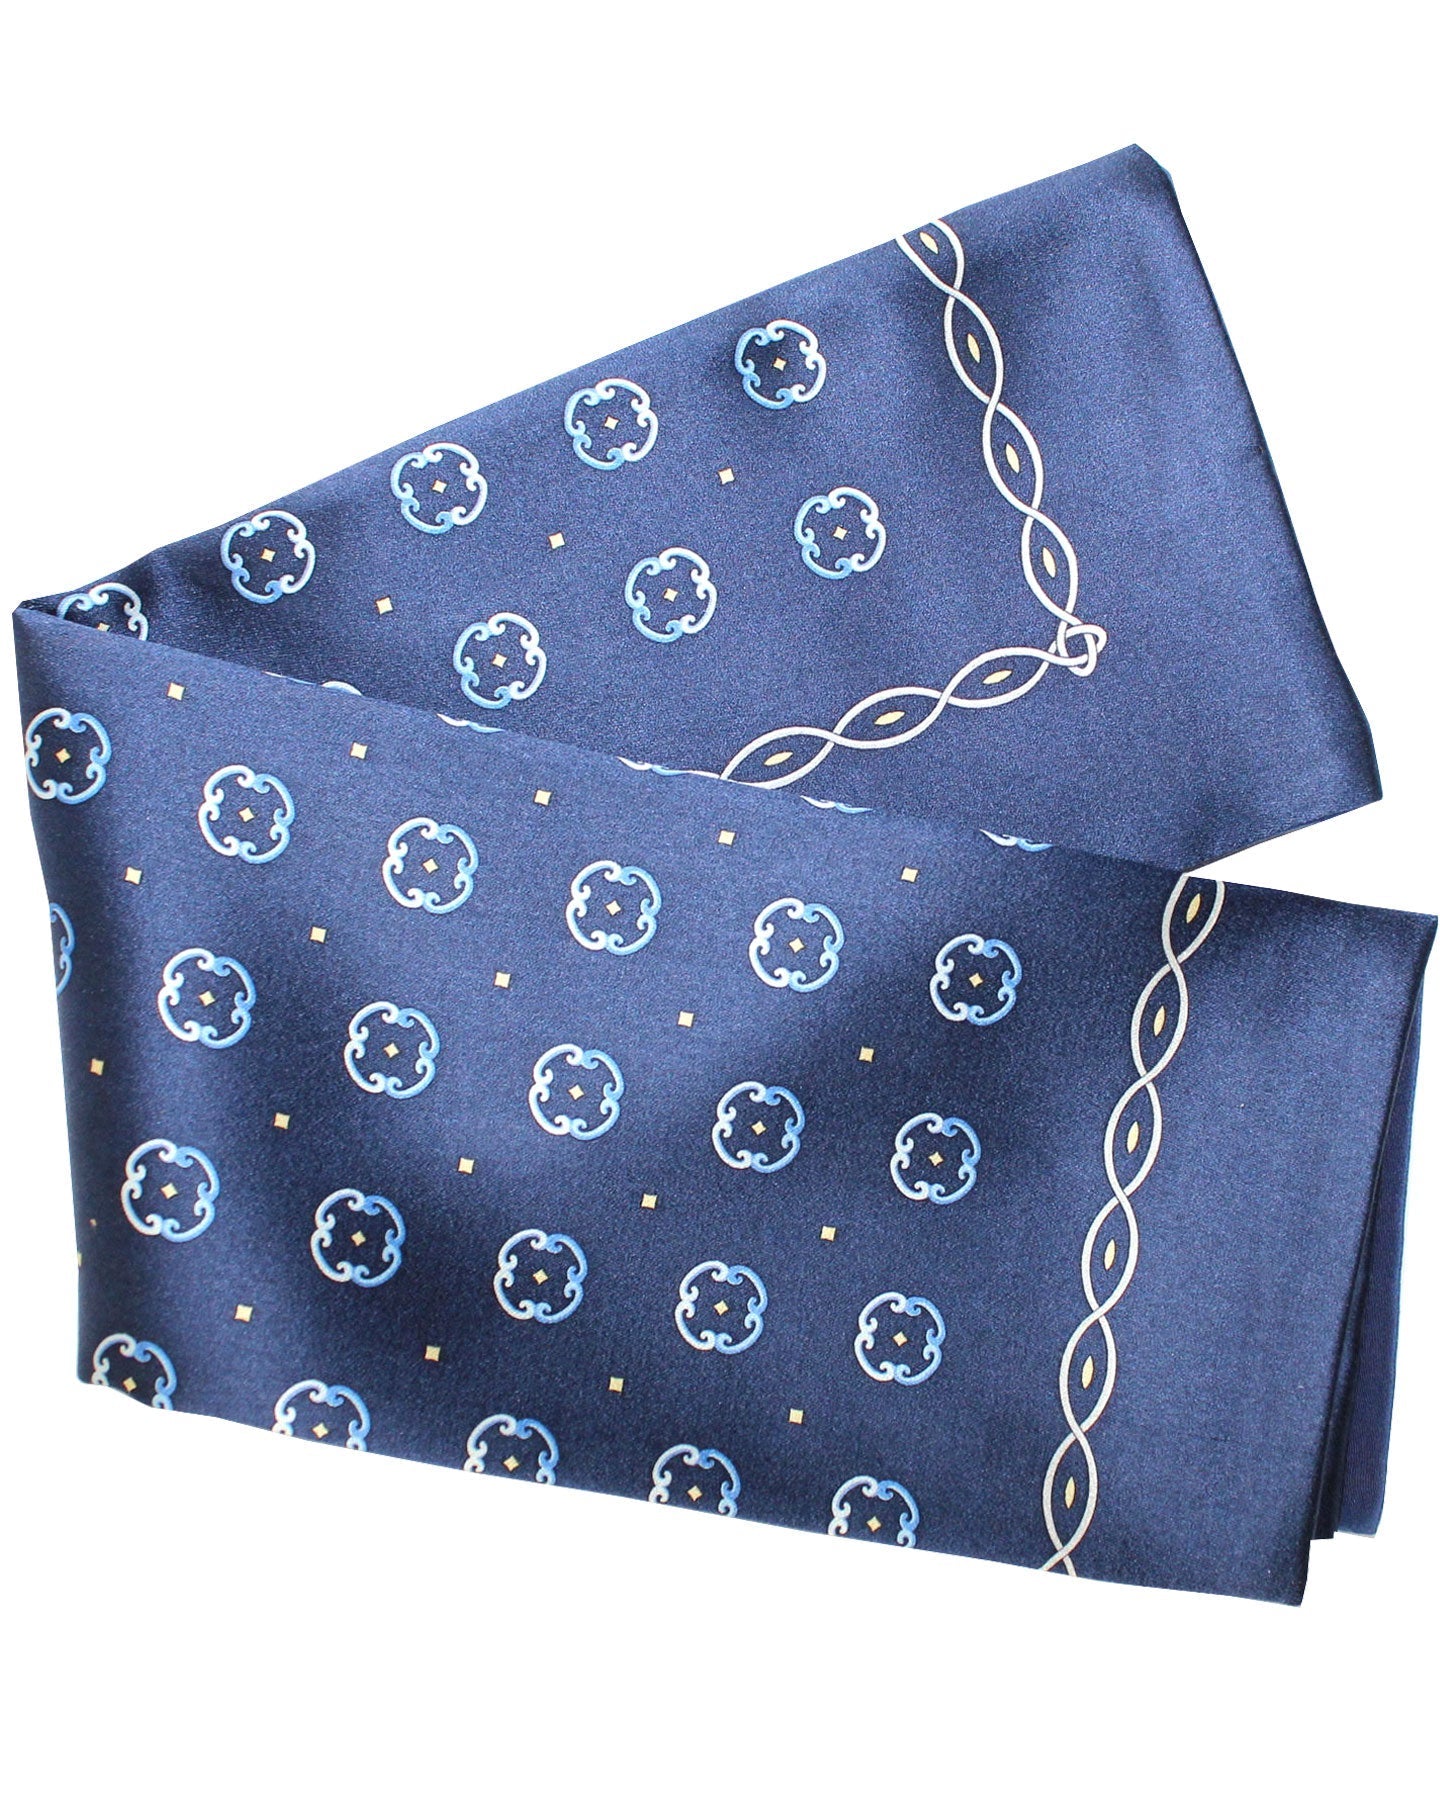 Zilli Silk Pocket Square Dark Blue Geometric Design SALE